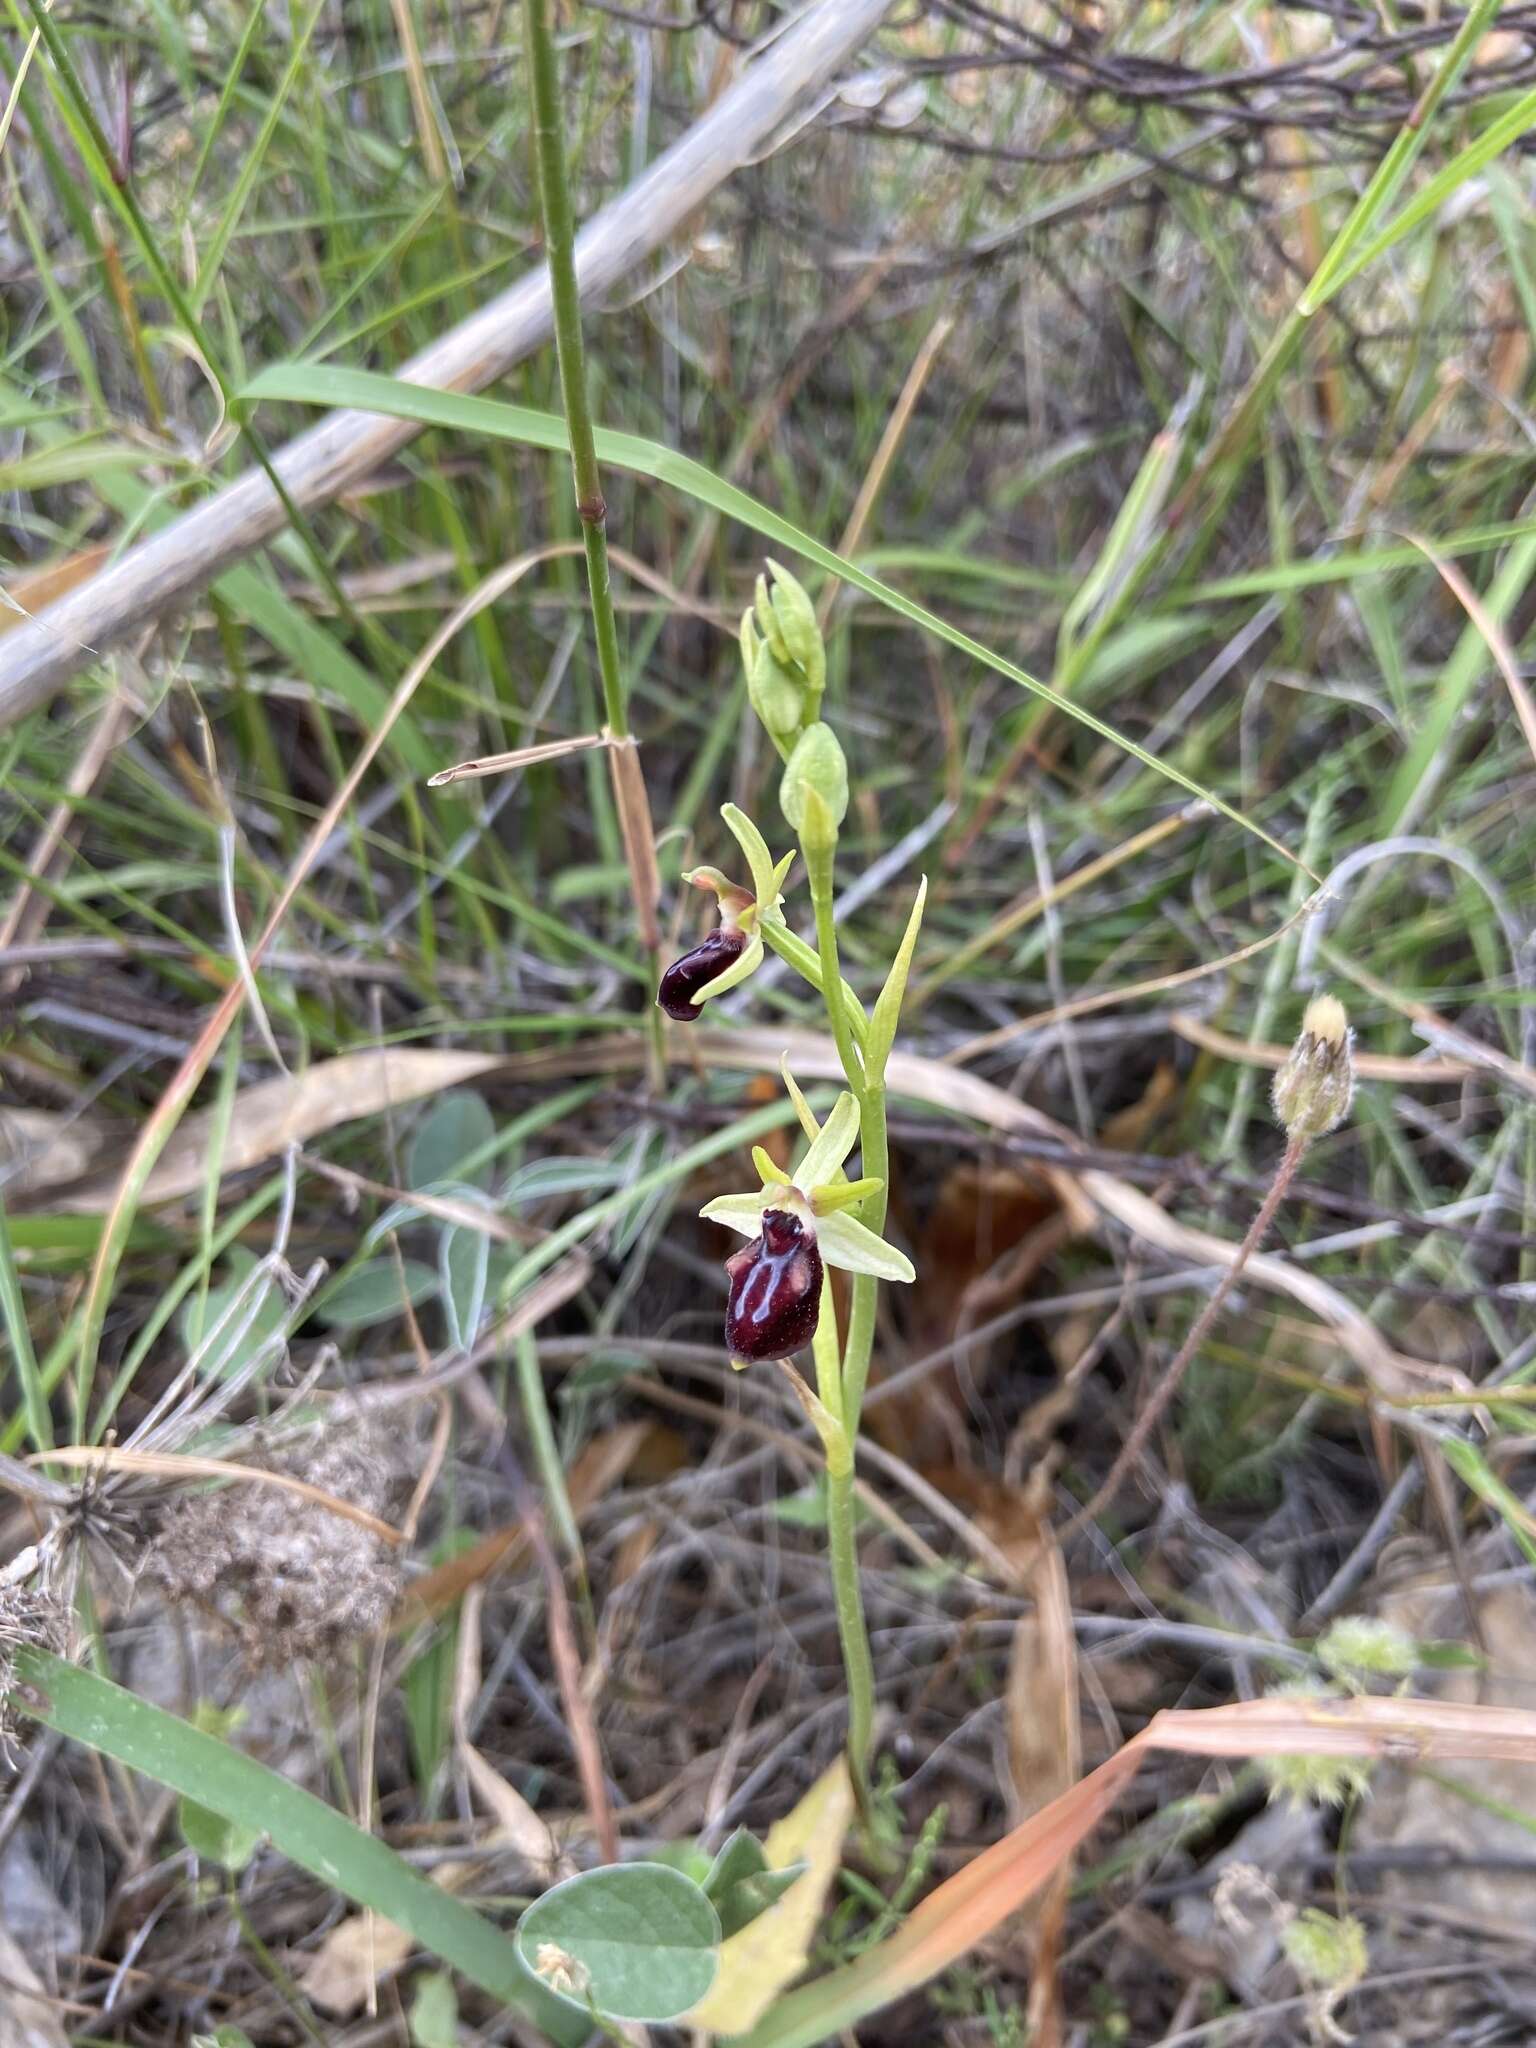 Image of Ophrys sphegodes subsp. gortynia H. Baumann & Künkele